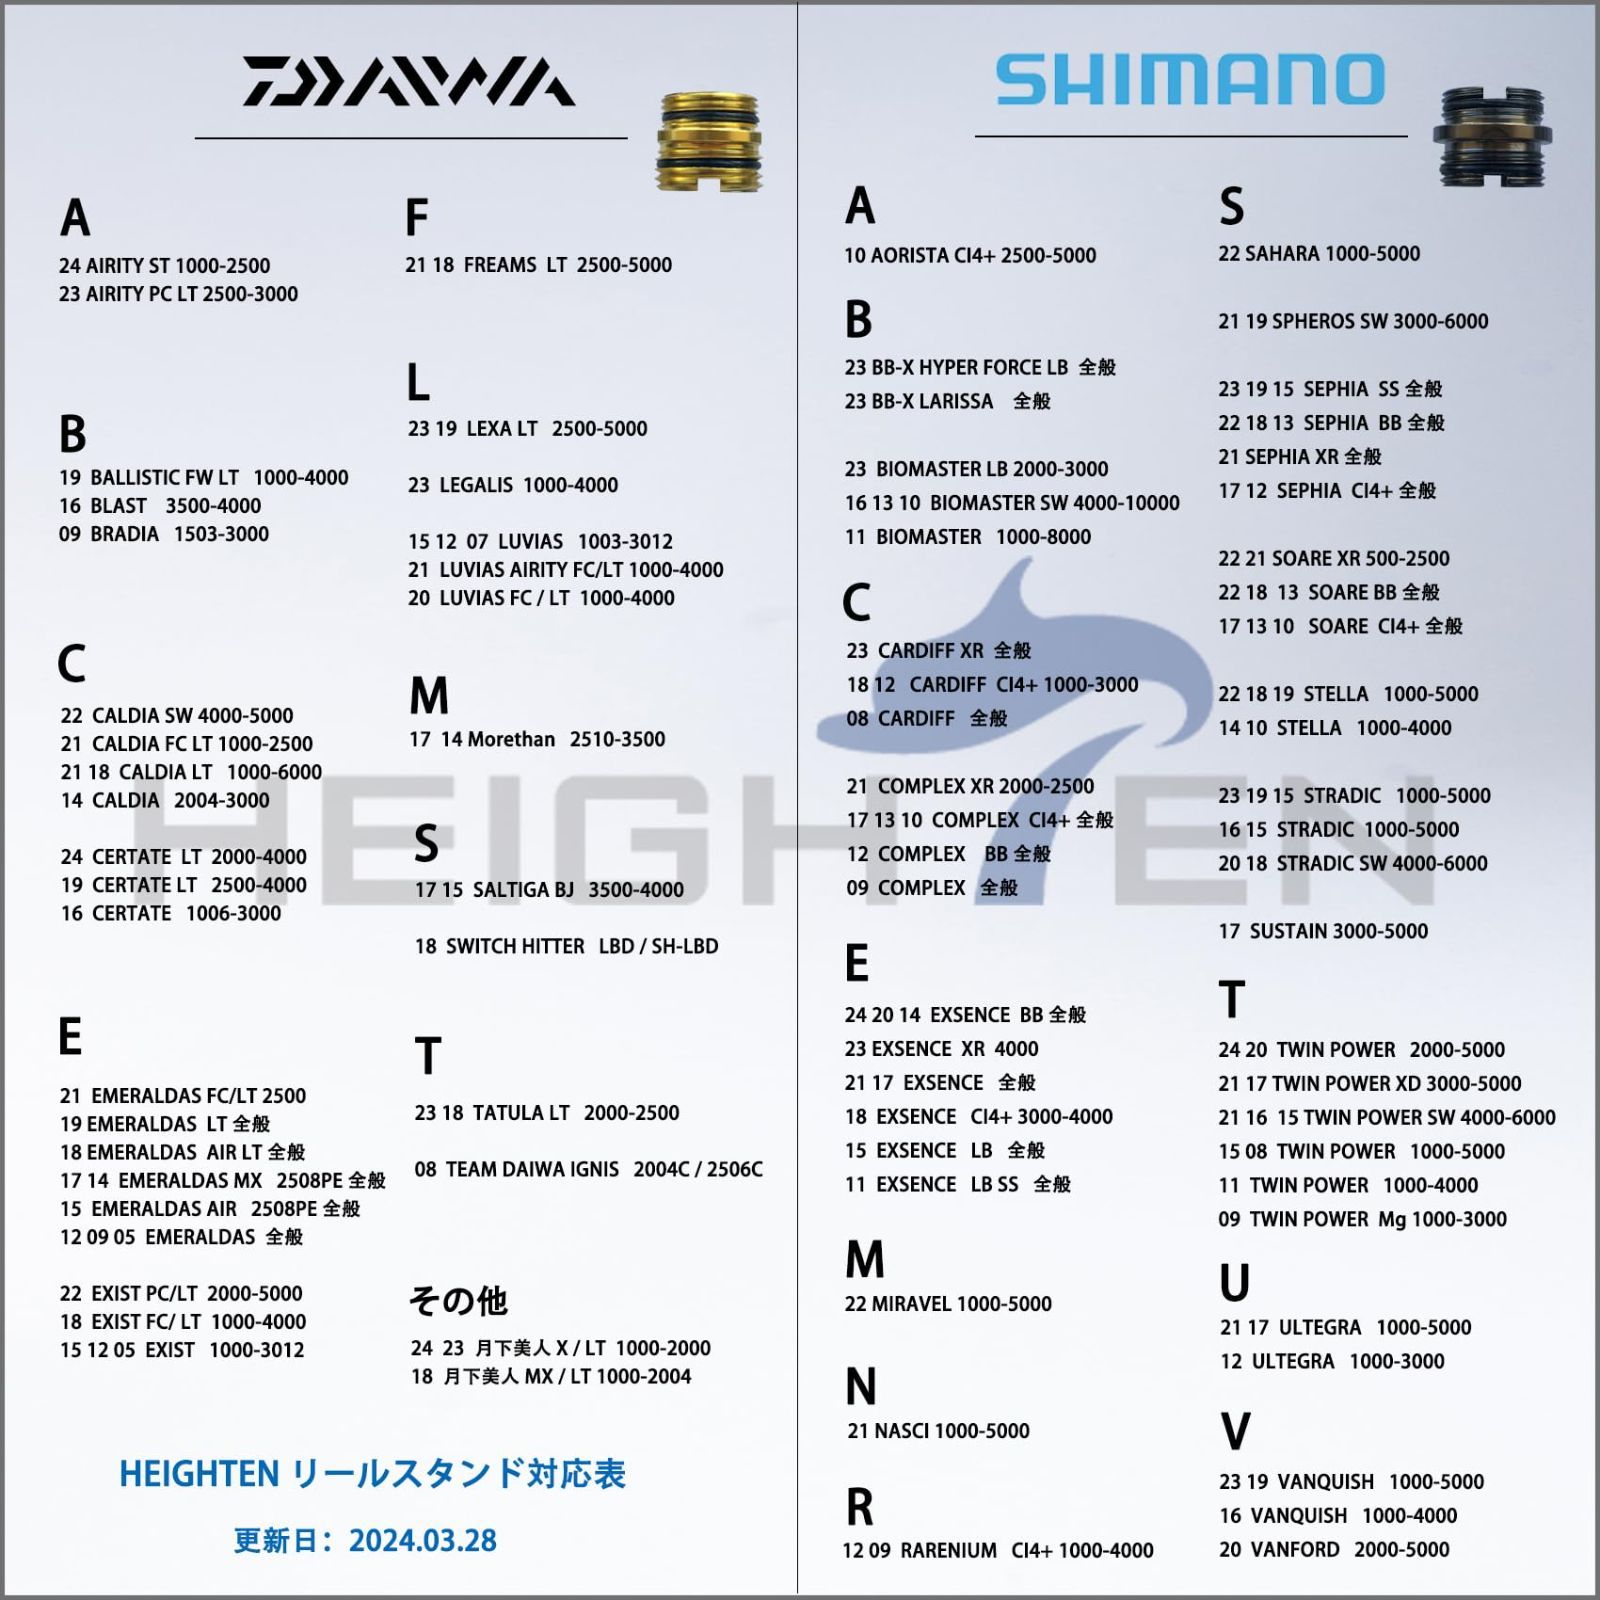 HEIGHTEN 48mm リール スタンド カスタムバランサー 夜光 シマノ(SHIMANO) ダイワ(DAIWA) スピニングリール 通用 7- 12g調整 フックキーパー ラインストッパー - メルカリ